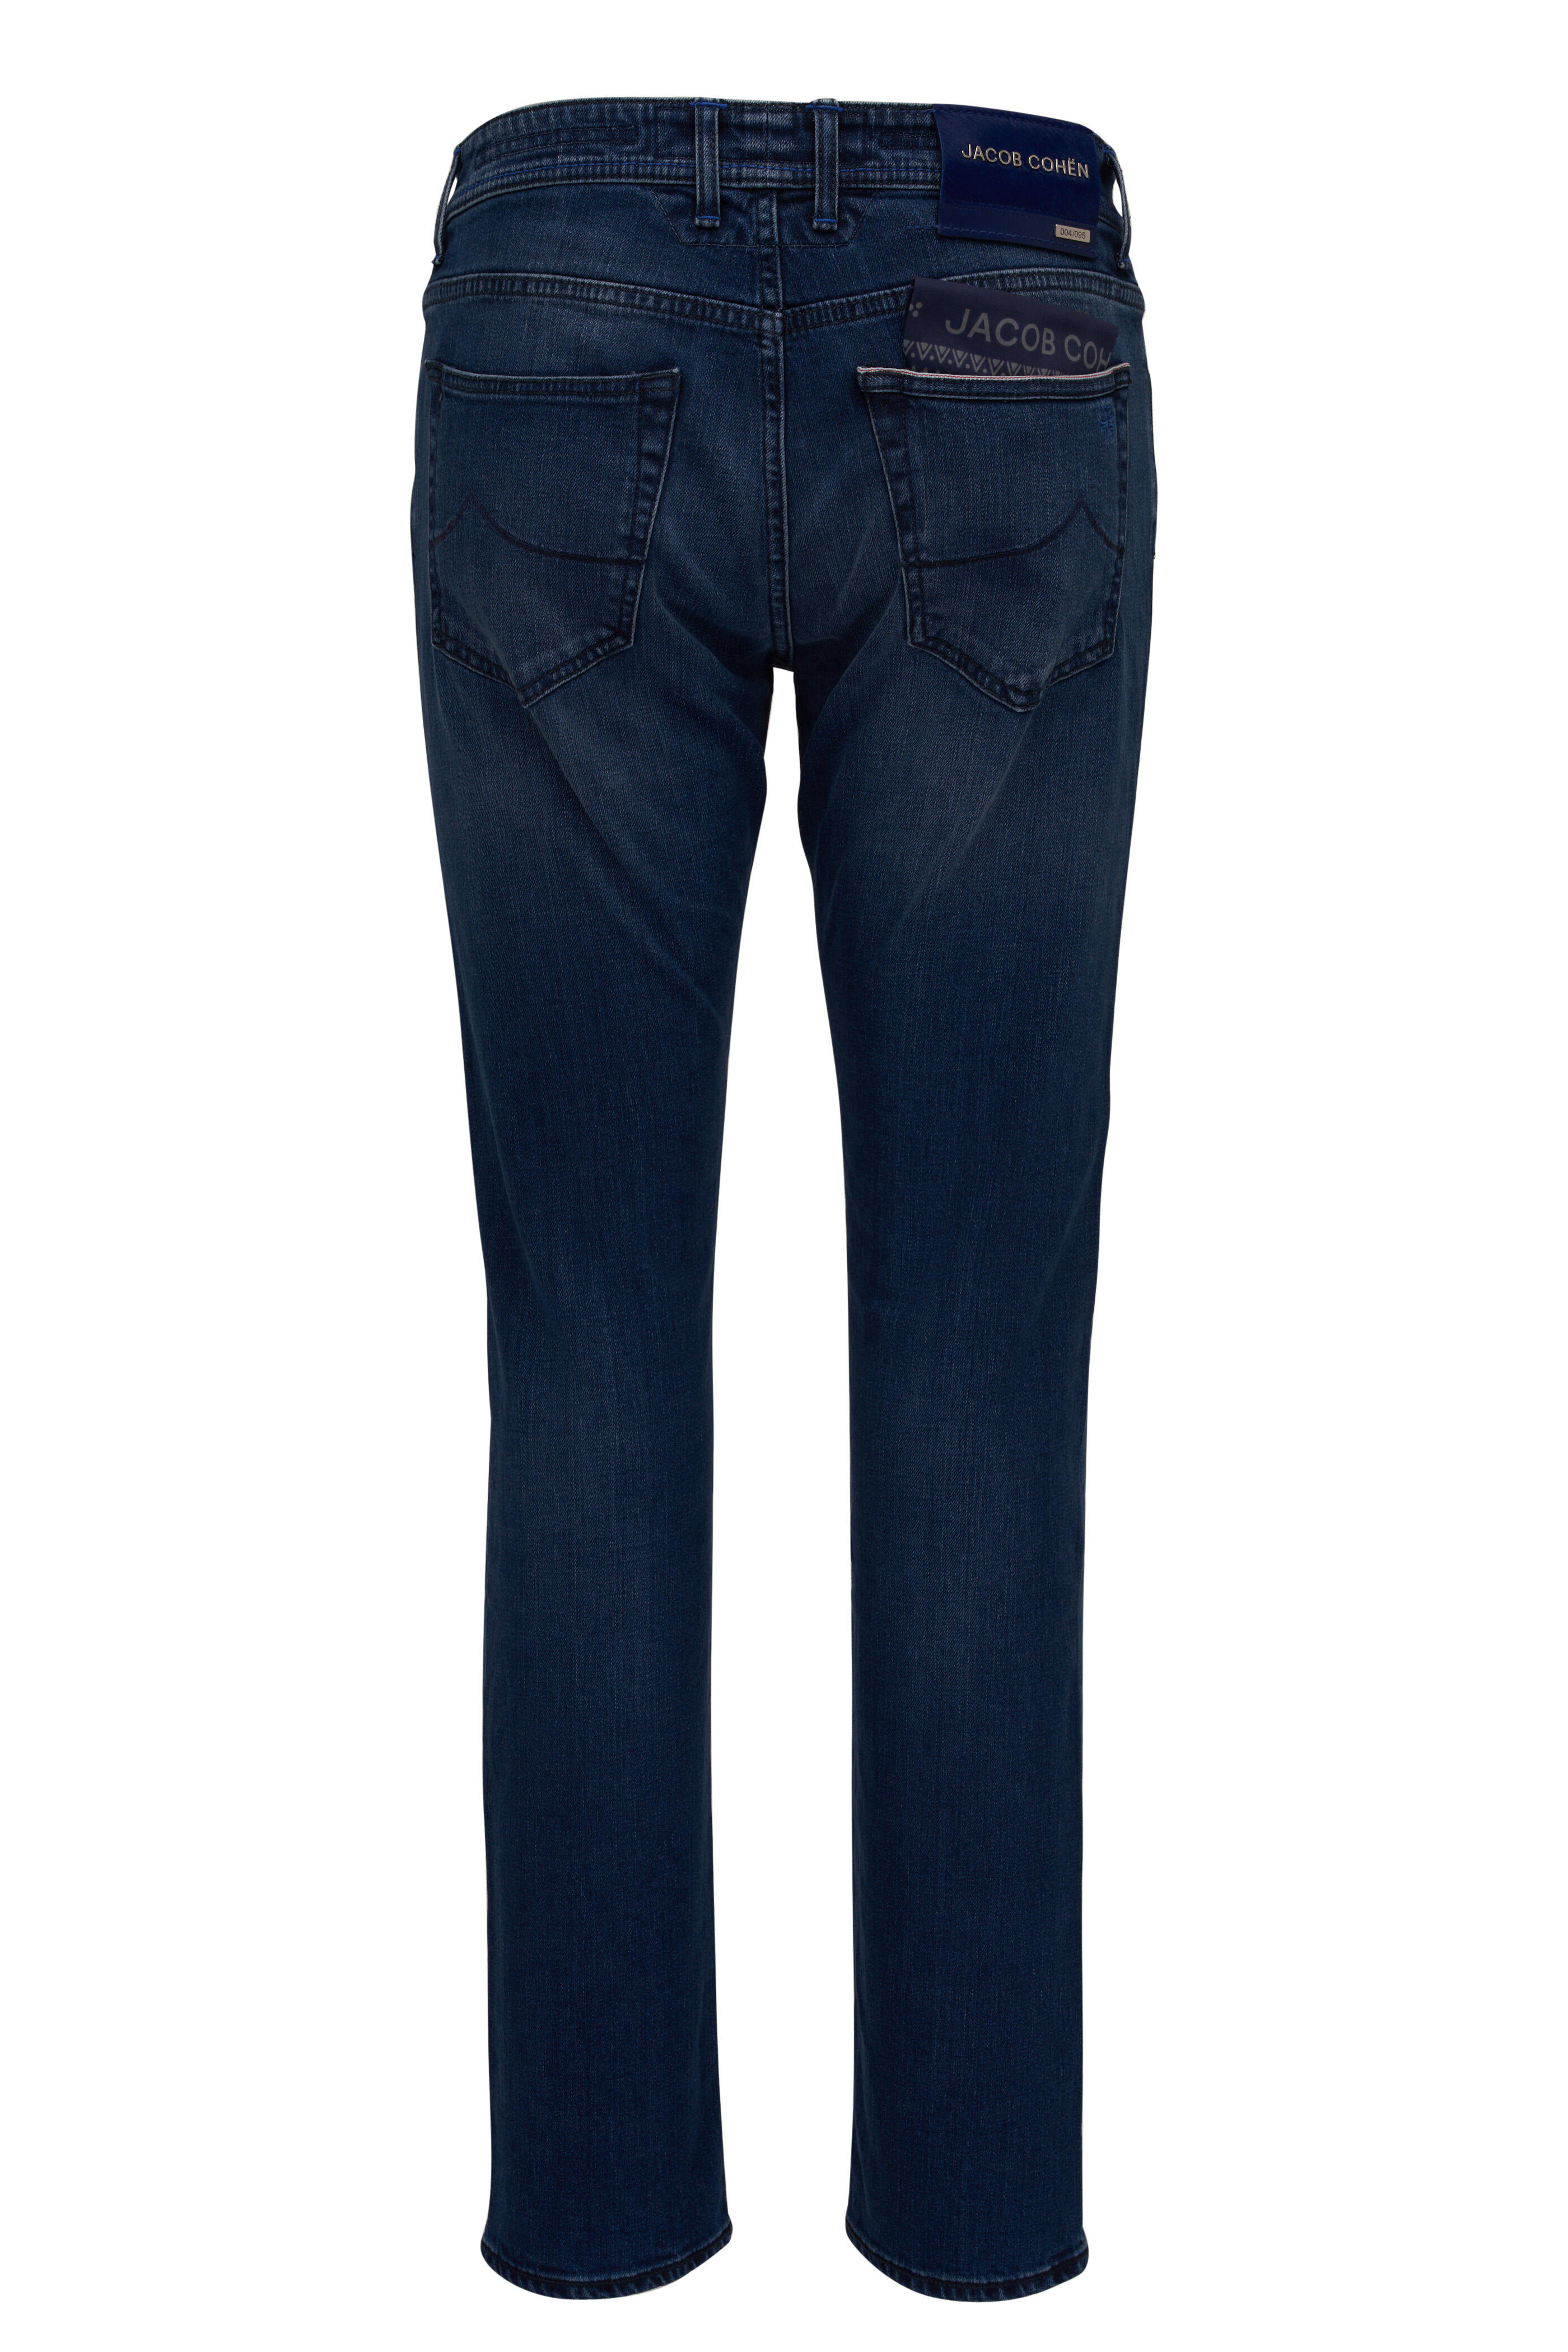 Jacob Cohen - Bard Limited Edition Denim Five Pocket Jean